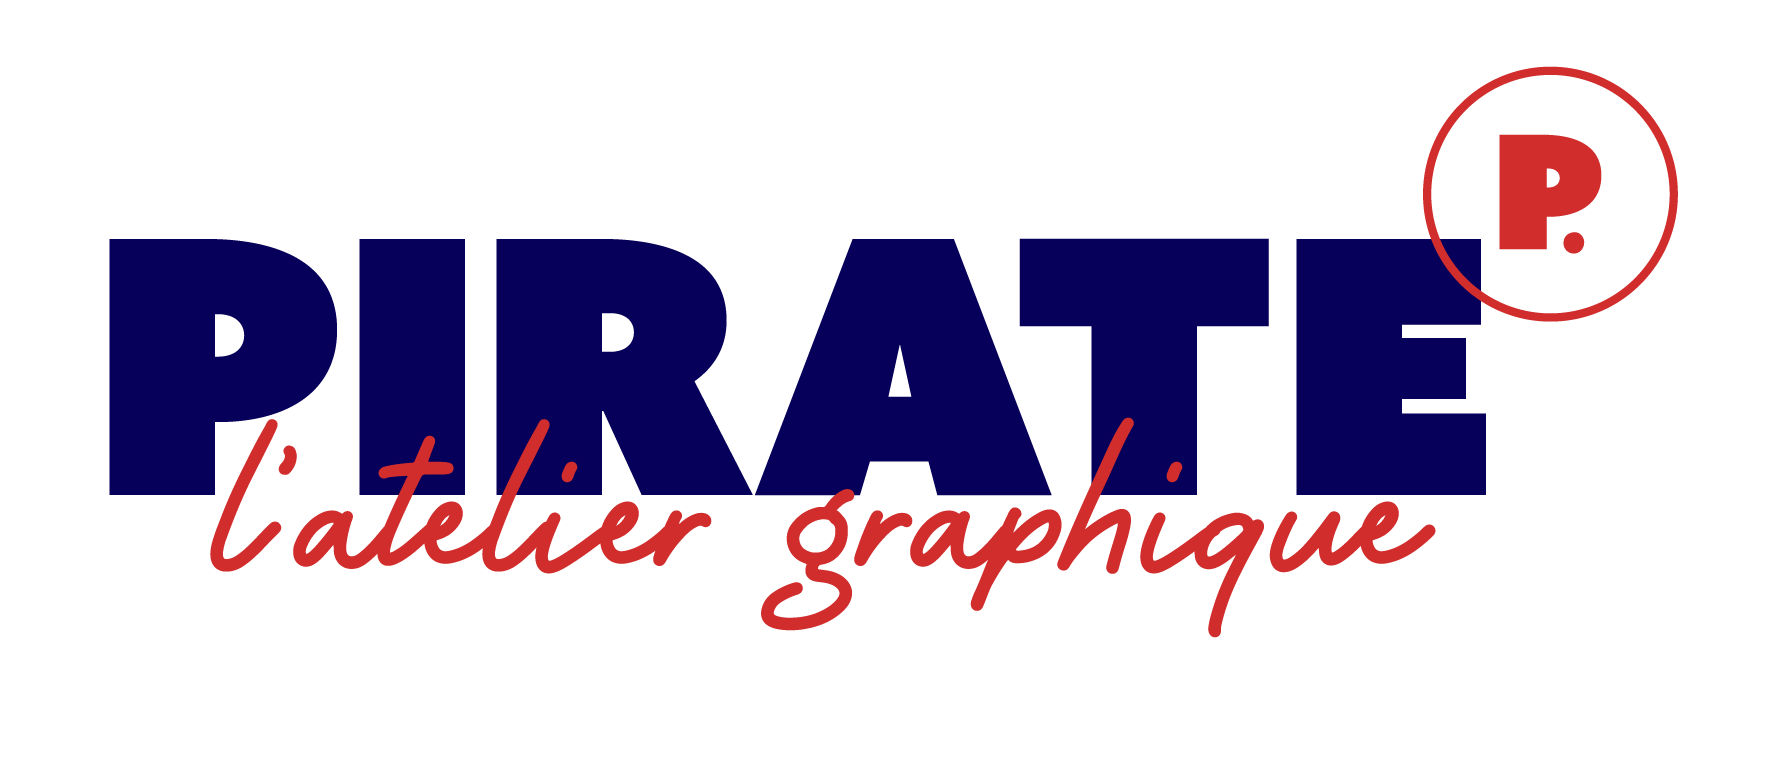 PIRATE, L’ATELIER GRAPHIQUE logo